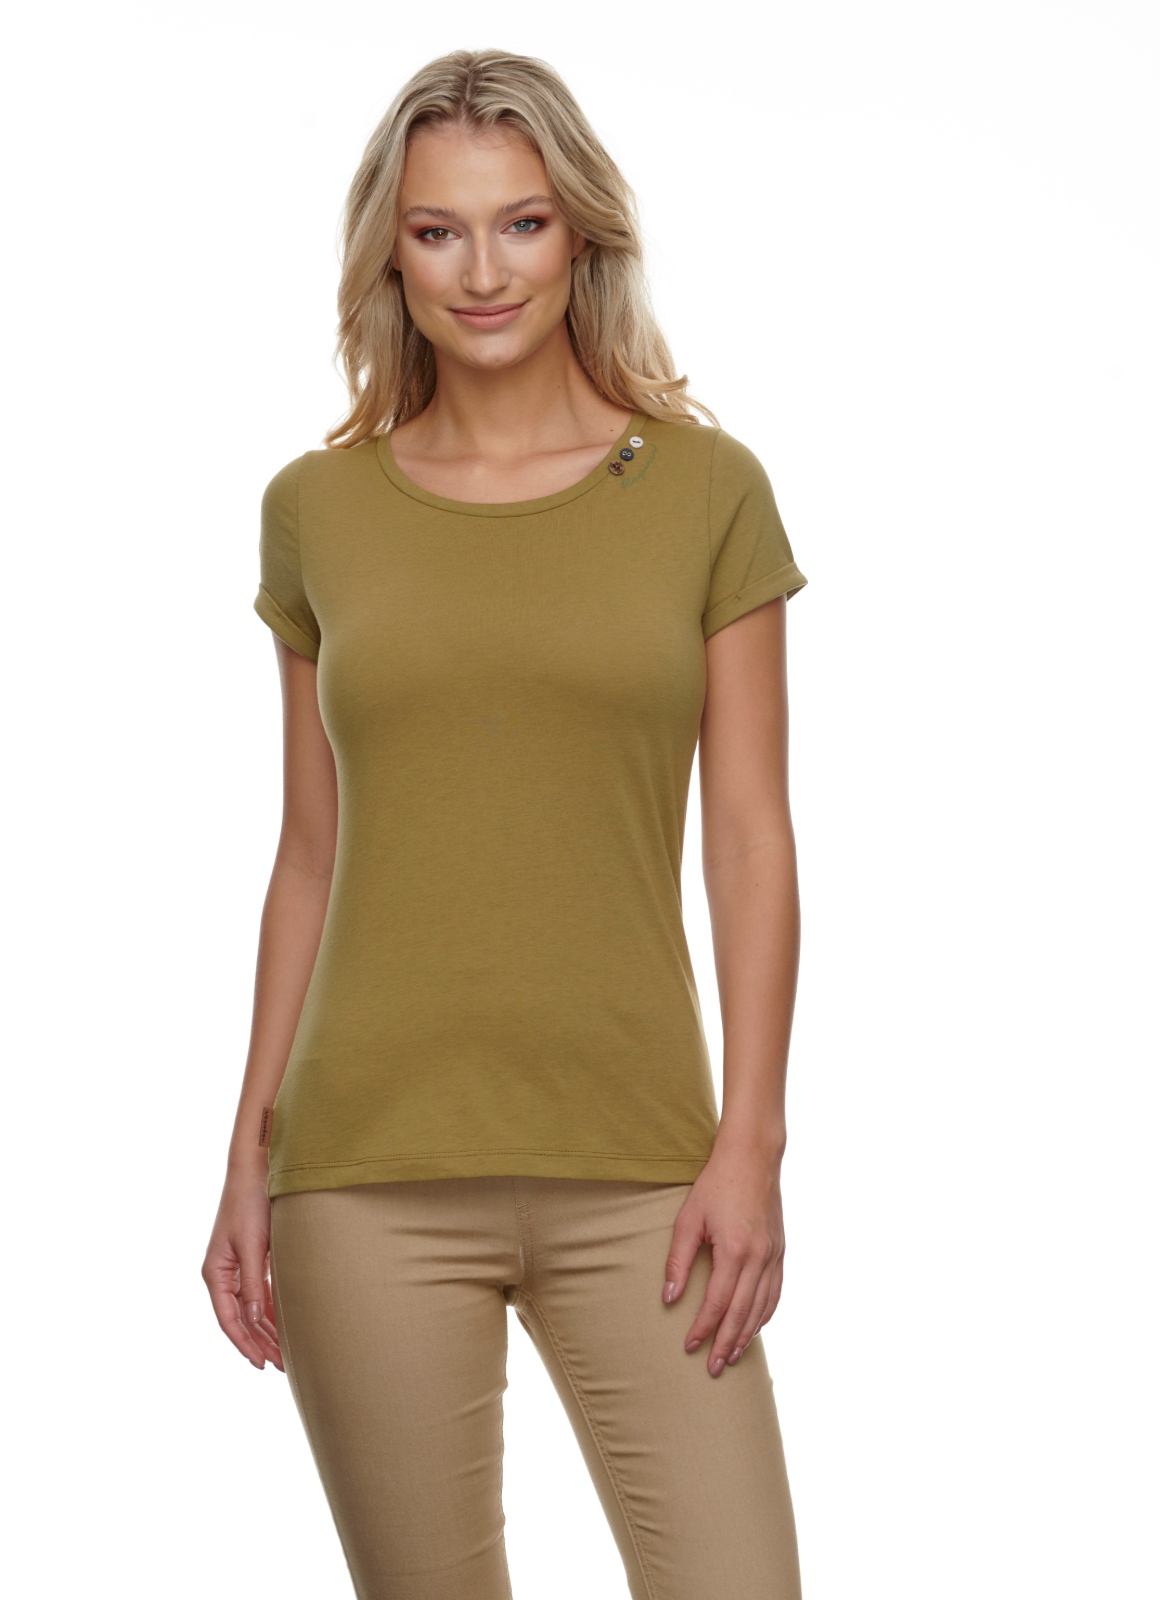 Ragwear Damen T-Shirt Florah a Organic grün unifarben 2111 10049 6044 Khaki